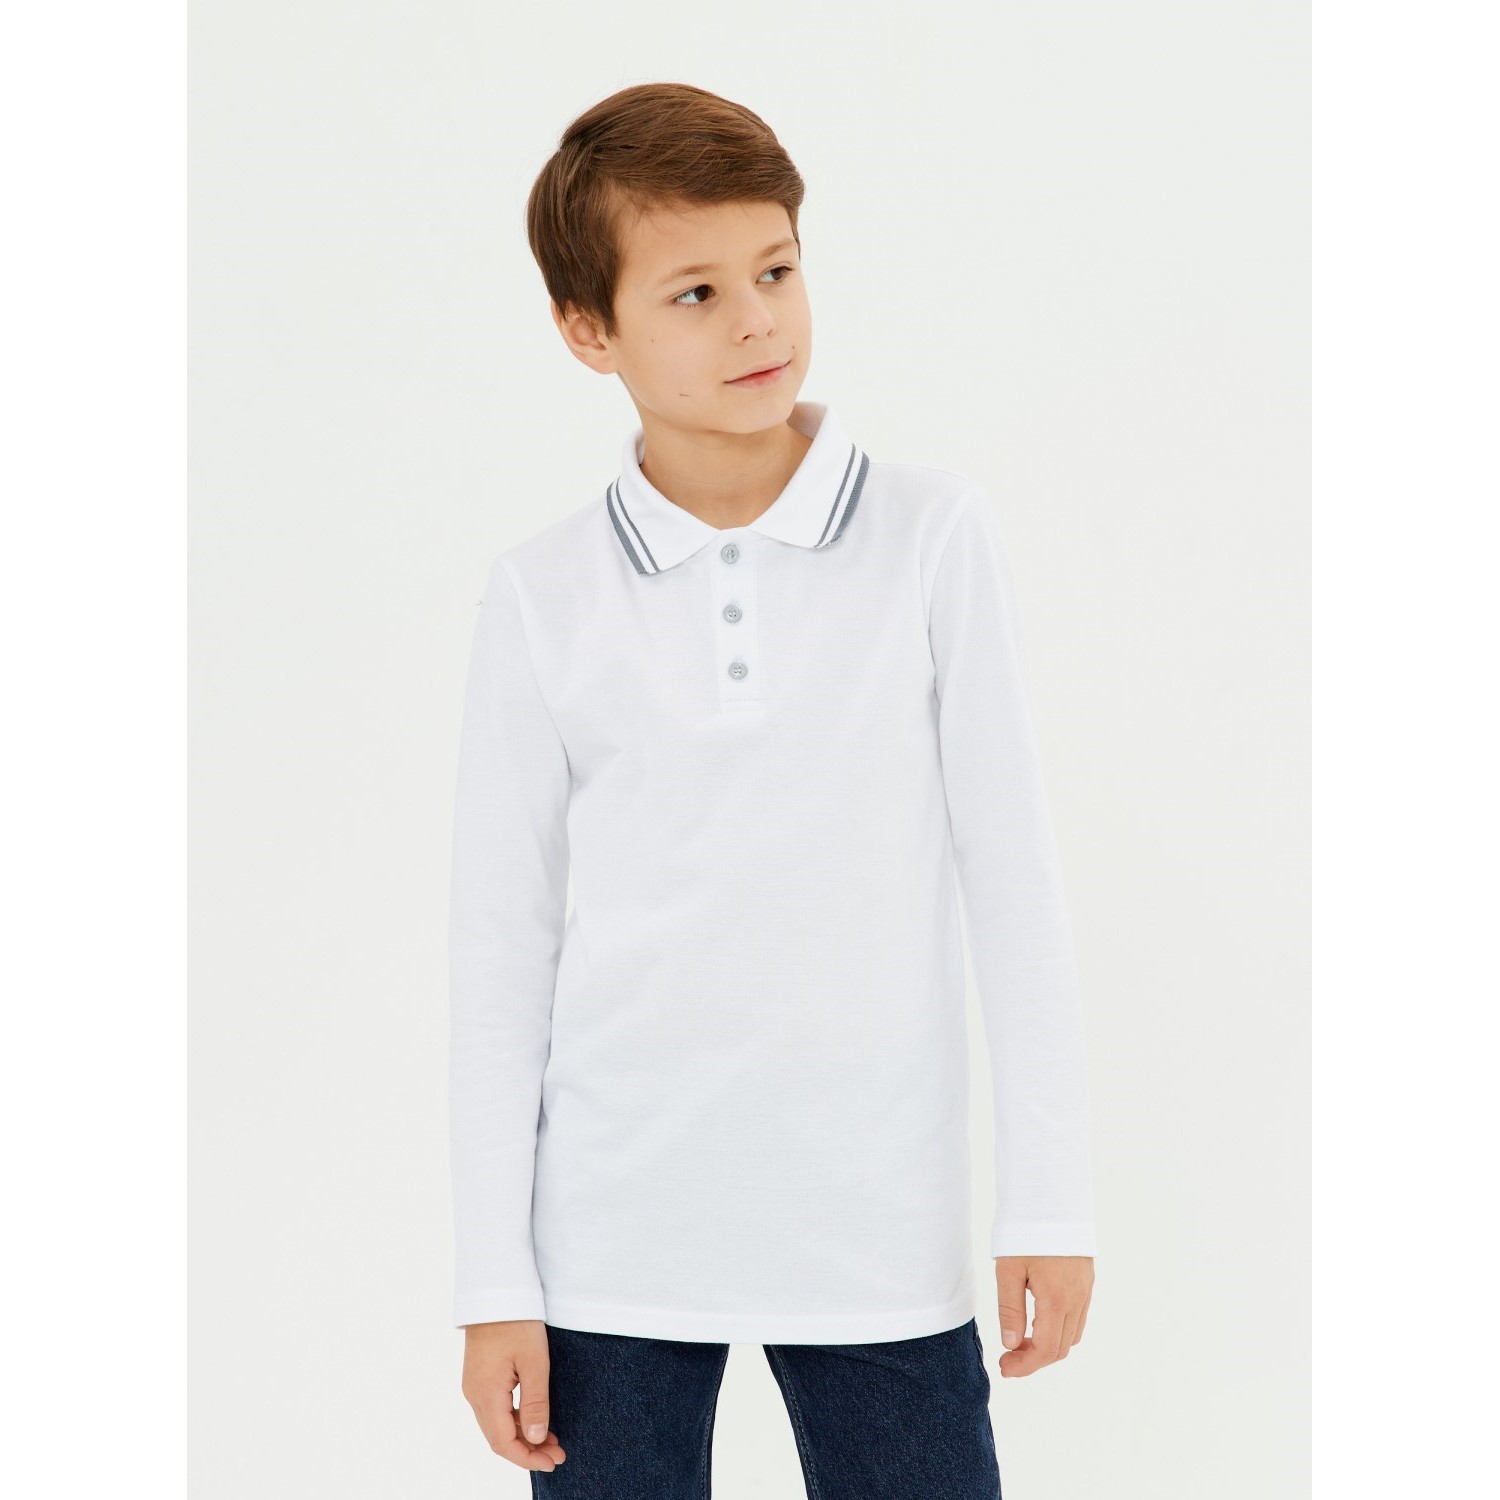 Рубашка-поло M-BABY MB-4141/белый/белый/серый - фото 4